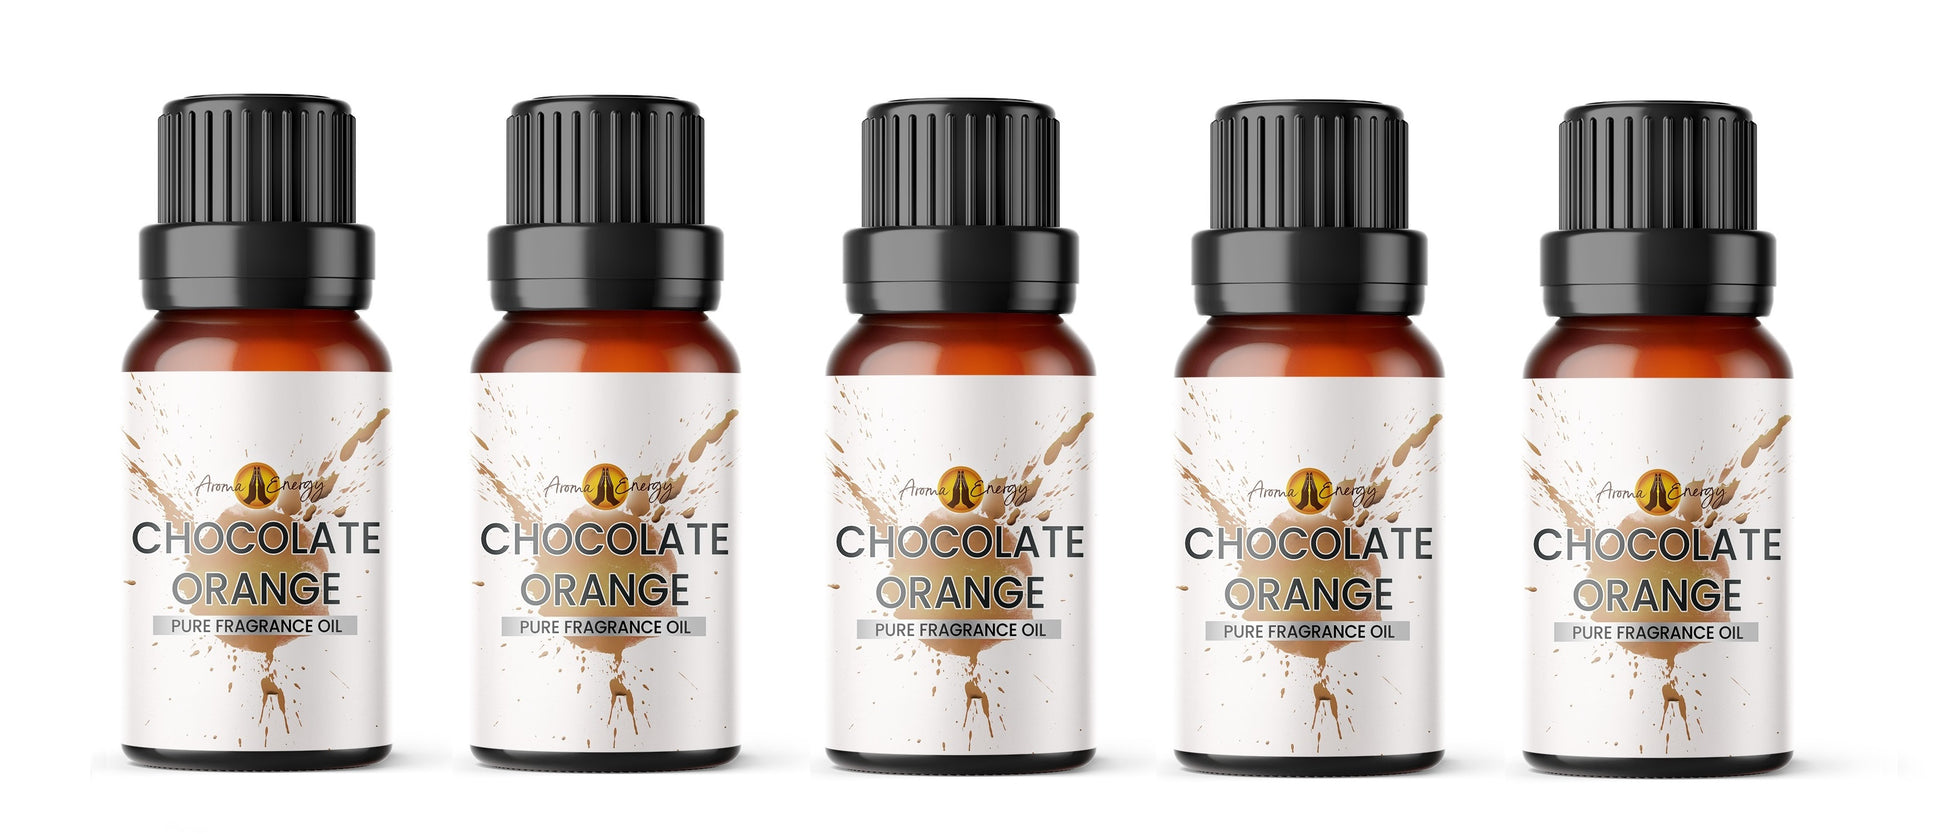 Chocolate Orange Fragrance Oil - Aroma Energy